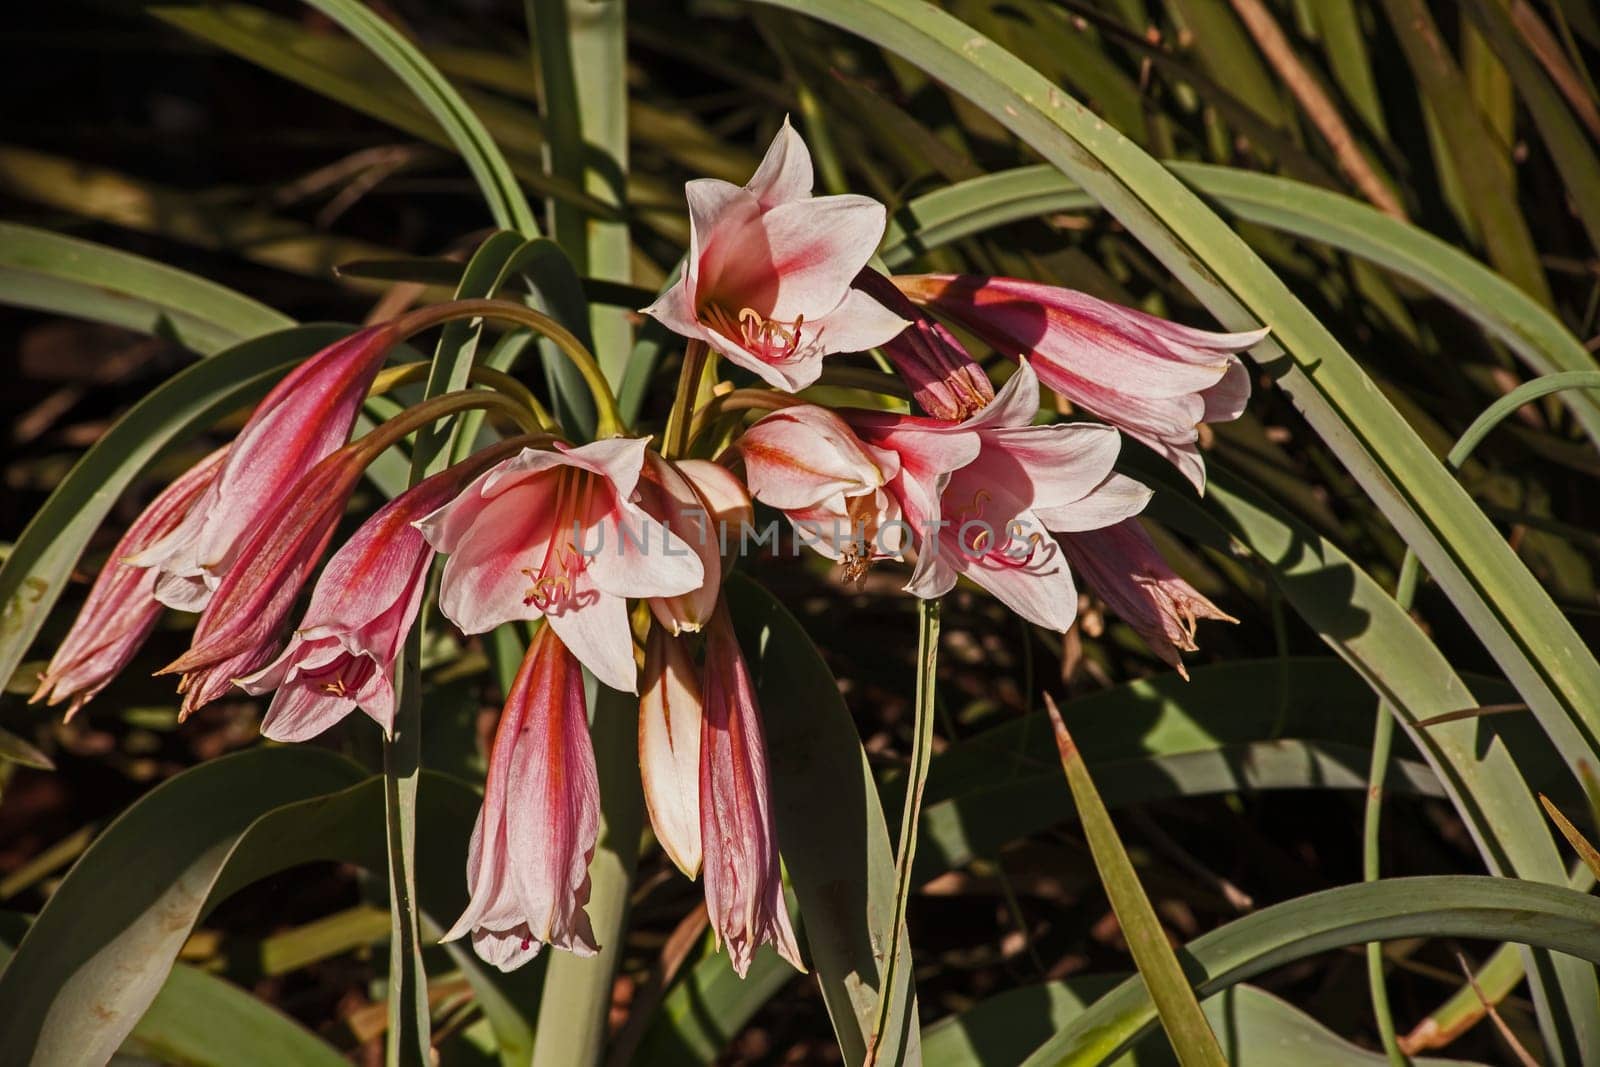 Orange River lily (Crinum bulbispermum) 16092 by kobus_peche